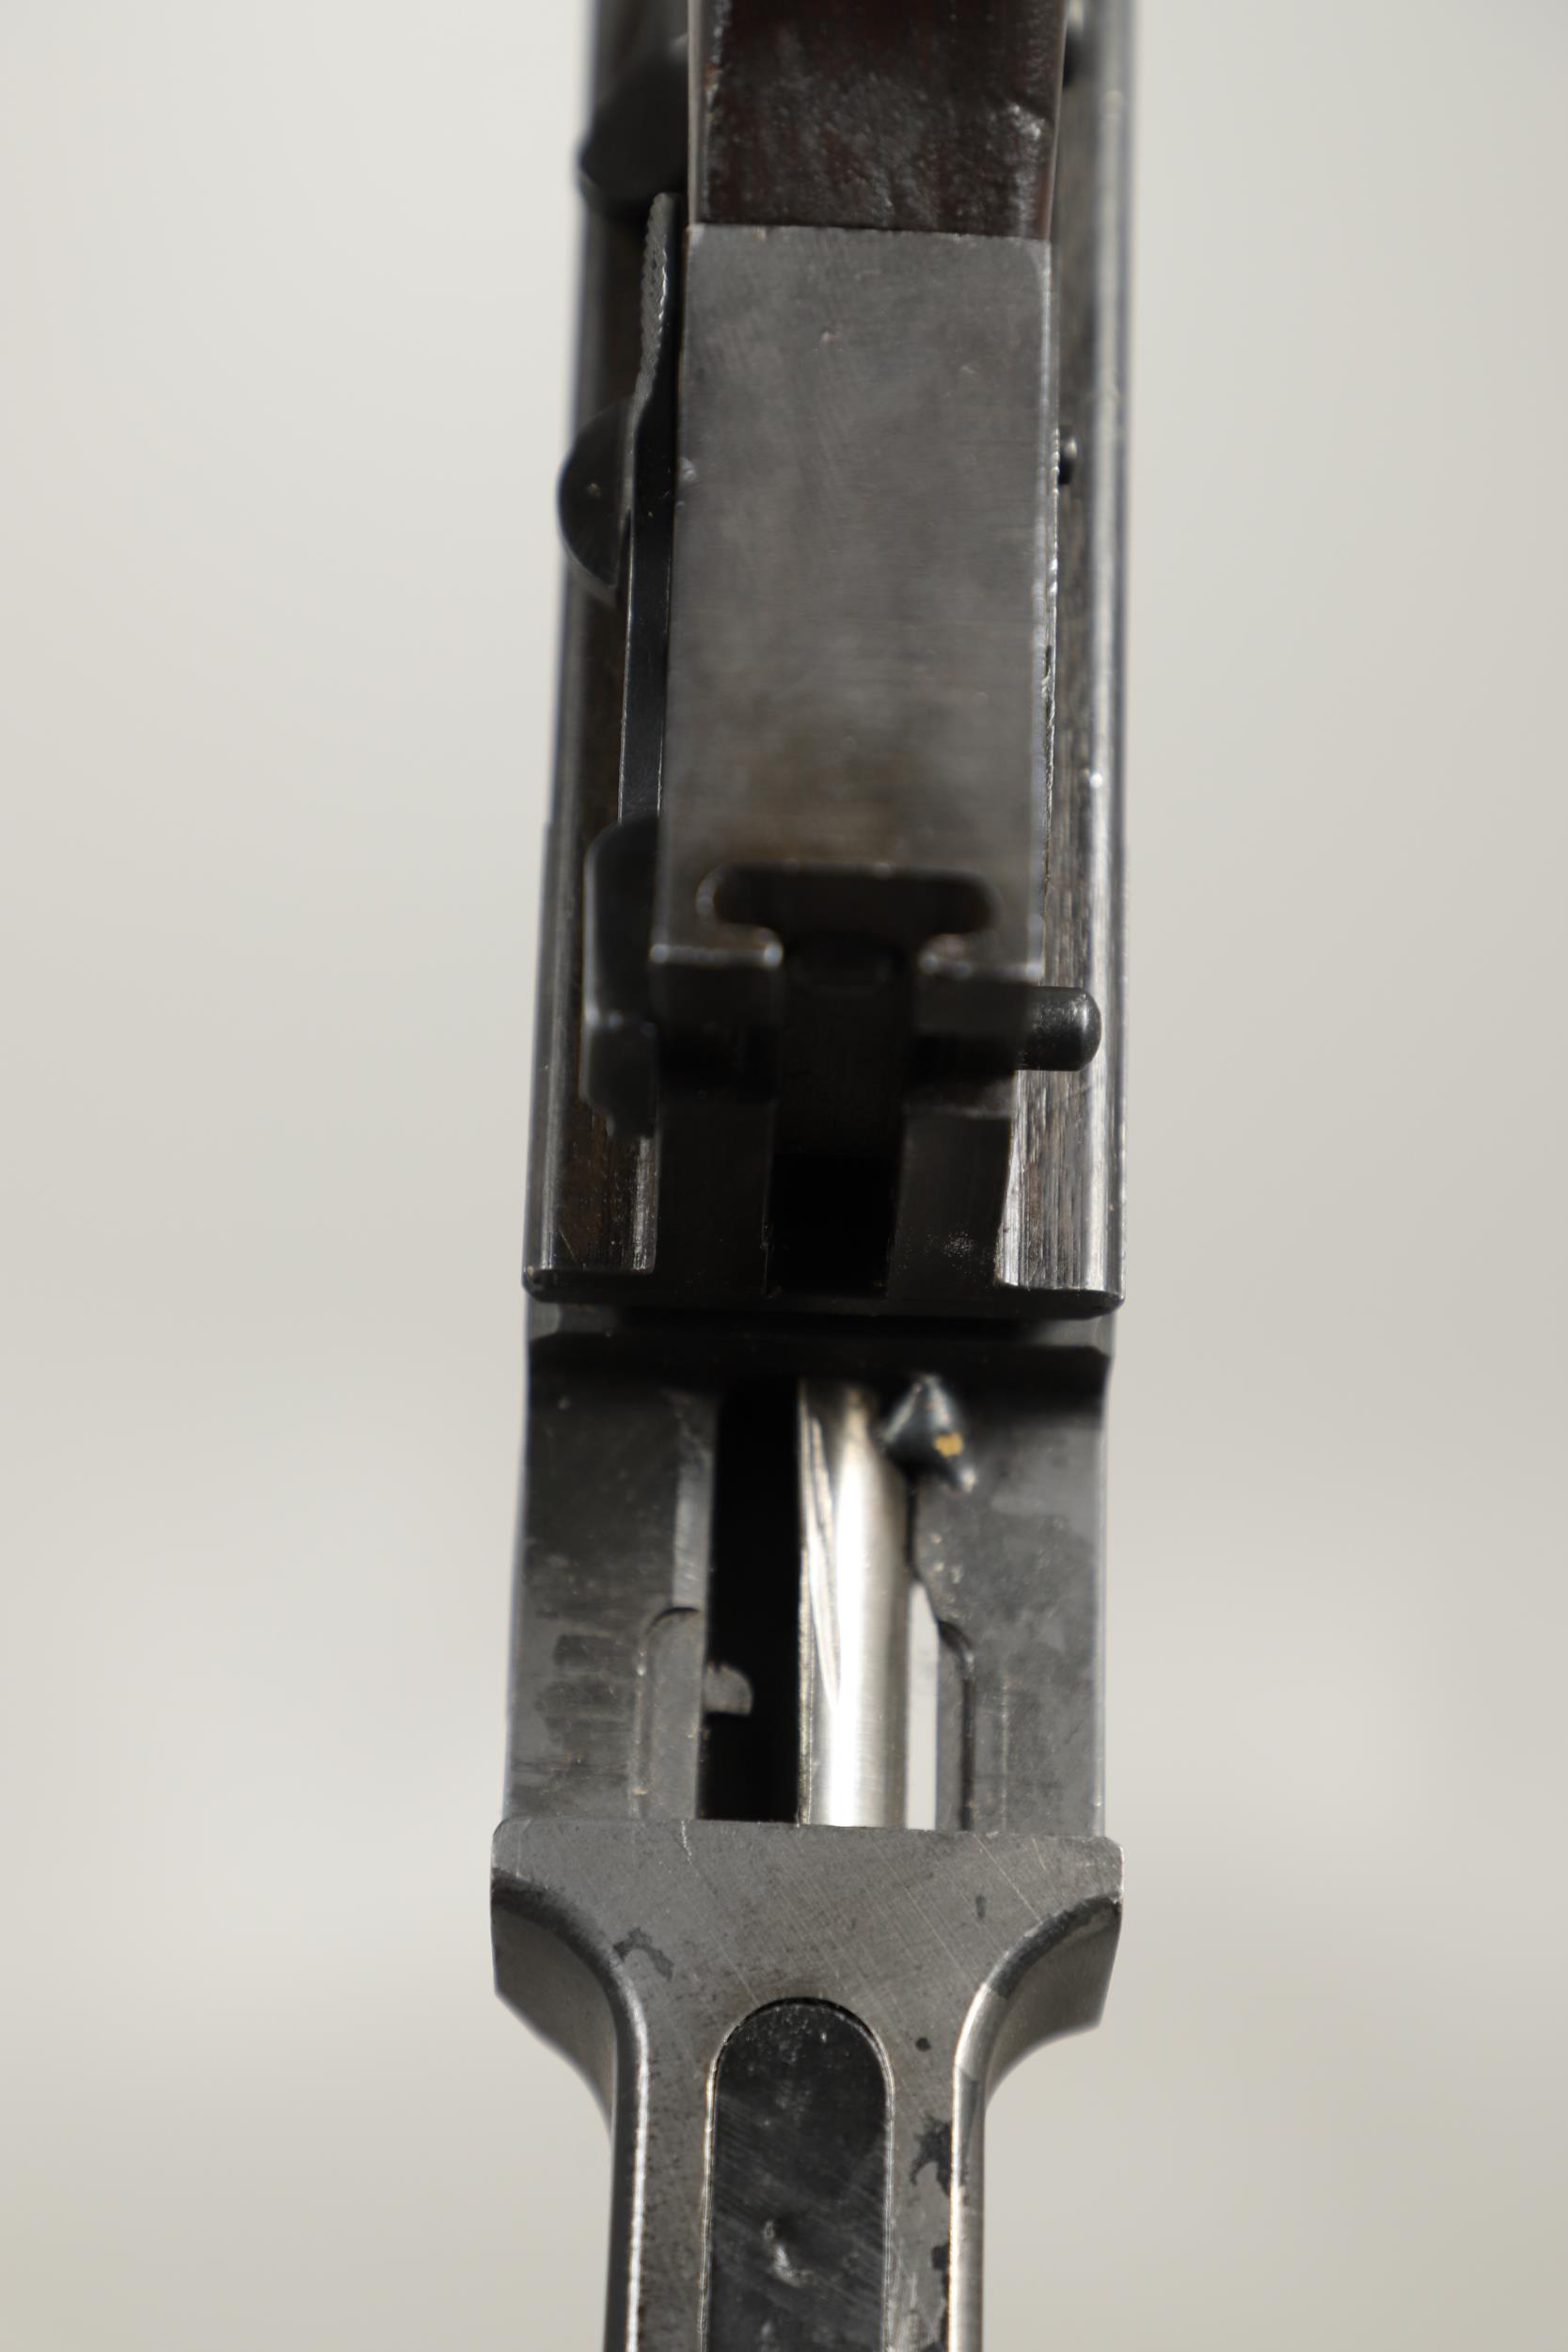 A DEACTIVATED AUTO-ORDNANCE CORPORATION THOMPSON .45 ACP SUBMACHINE GUN. - Image 22 of 29